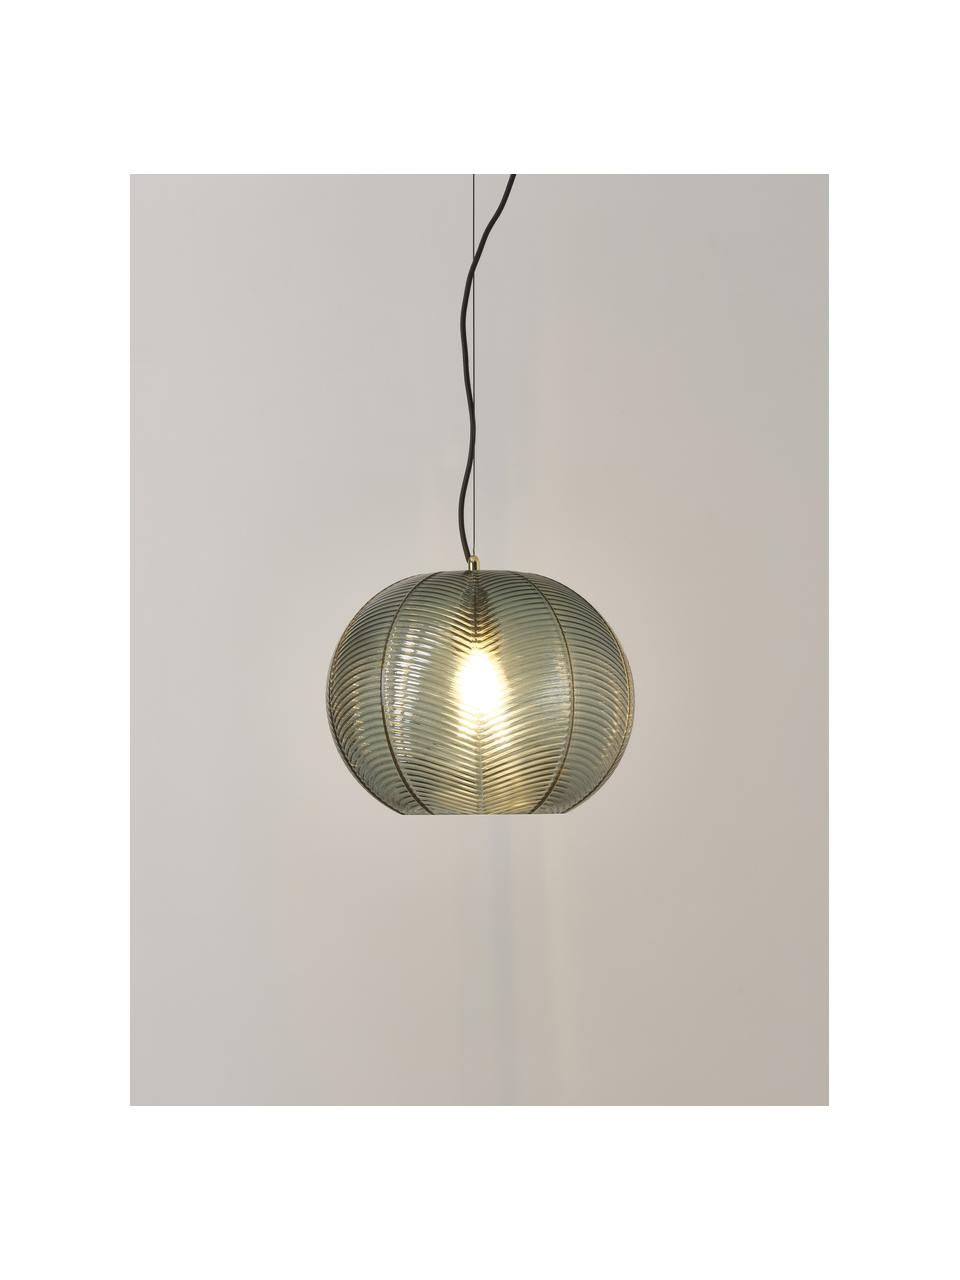 Hanglamp Brice van getint glas, Lampenkap: glas, Mintgroen, transparant, Ø 38 cm